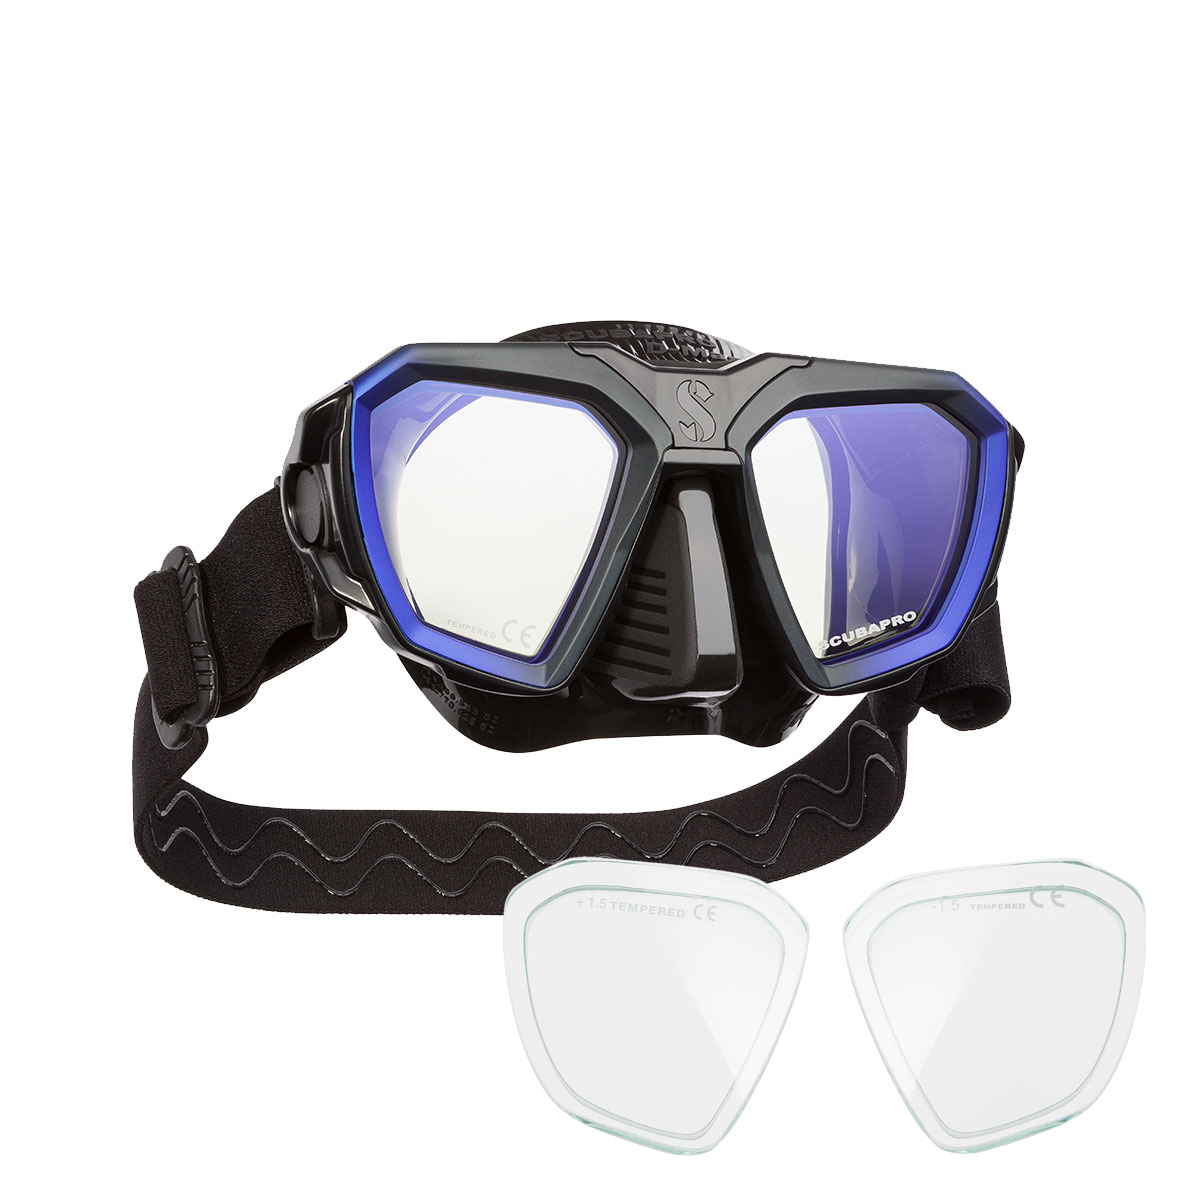 Scubapro dykkermaske D-Mask med styrke thumbnail